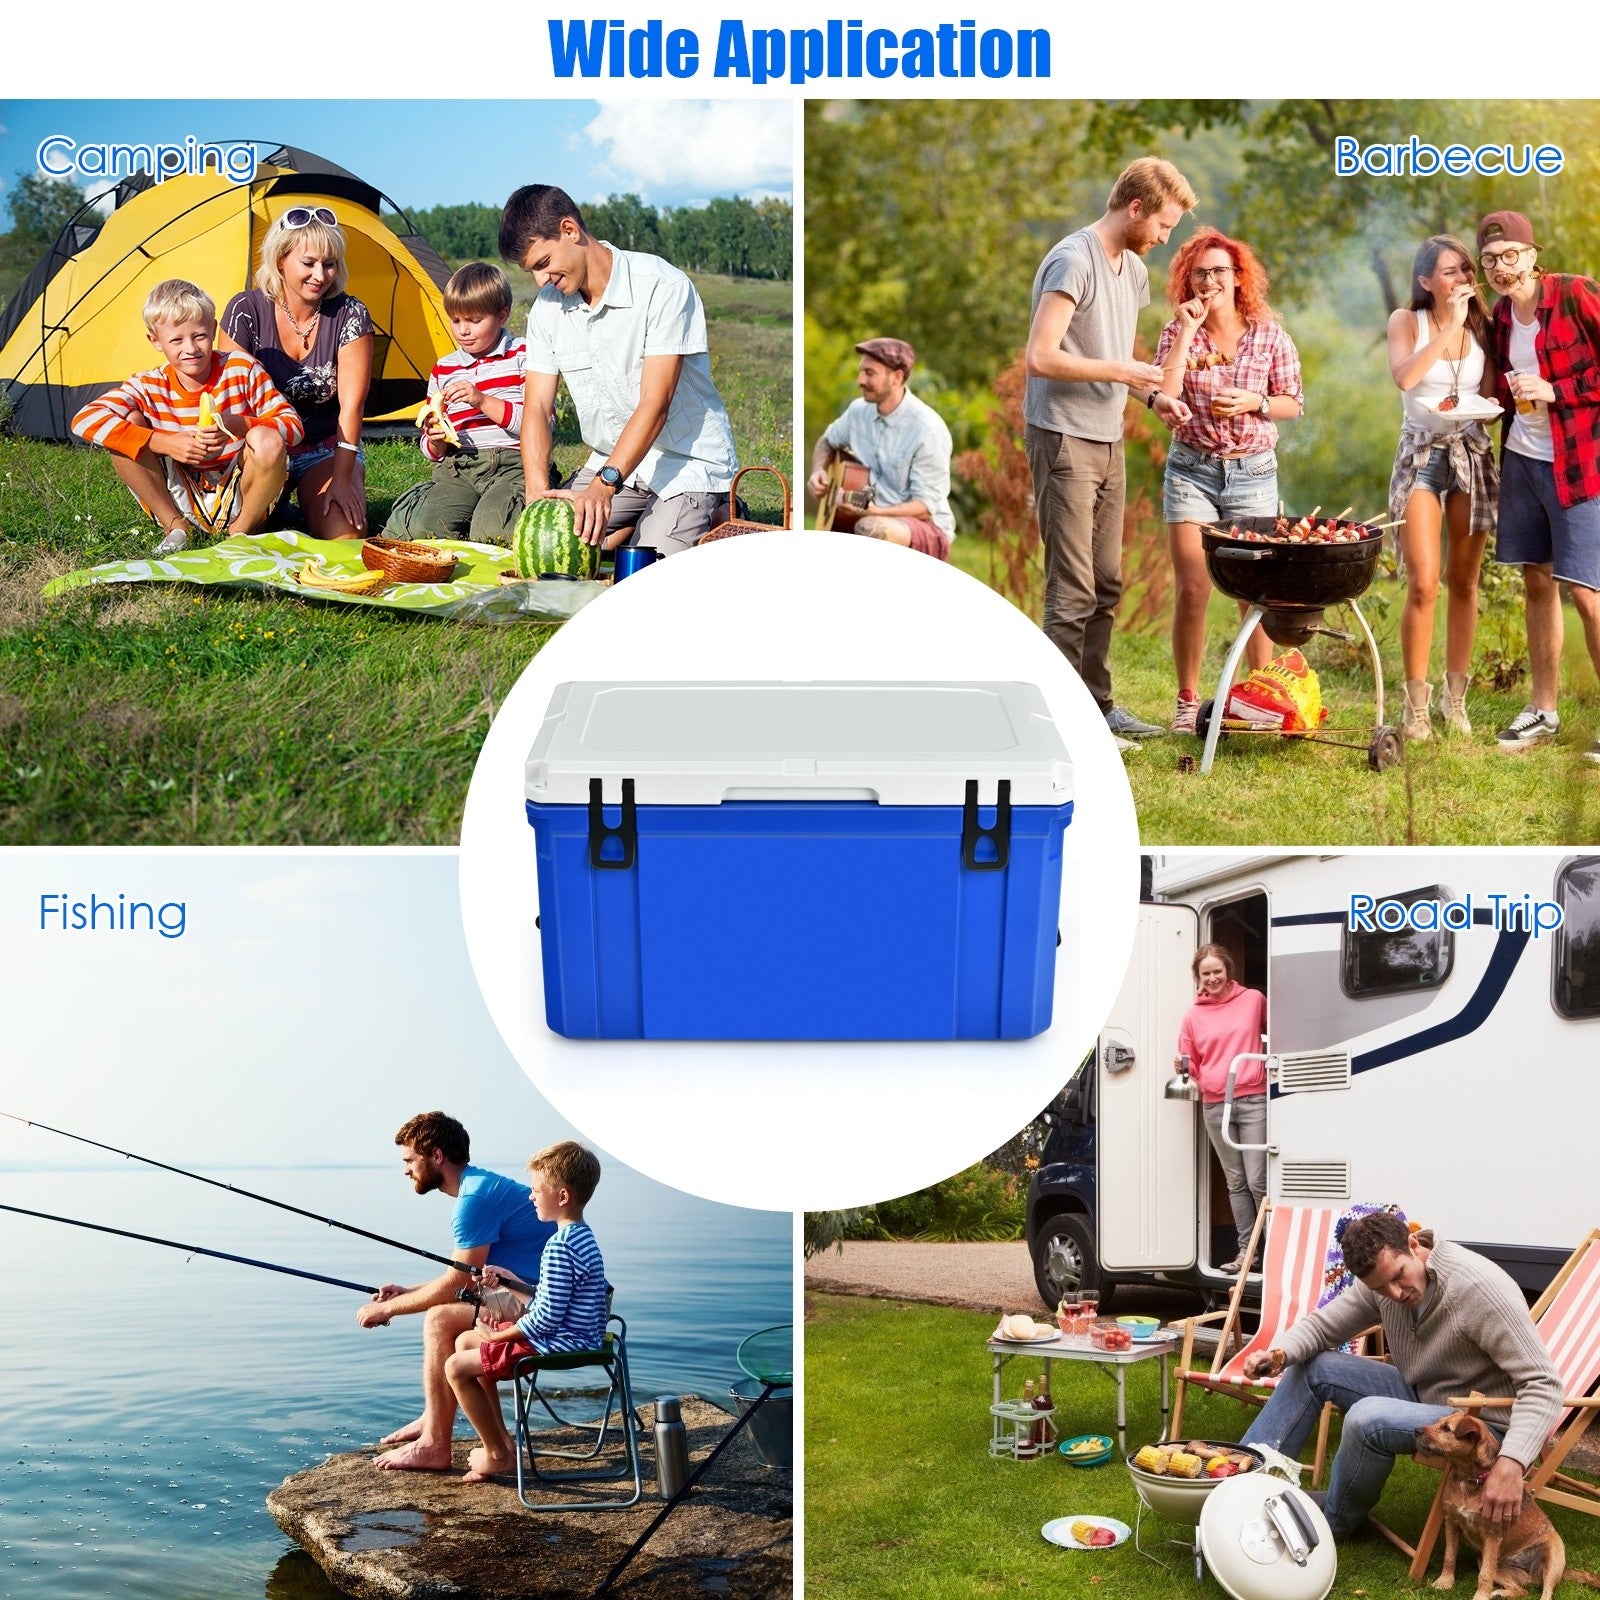 Giantex Portable Cooler, 79 Quart 3-4 Days Camping Ice Chest, PE & PU Materials